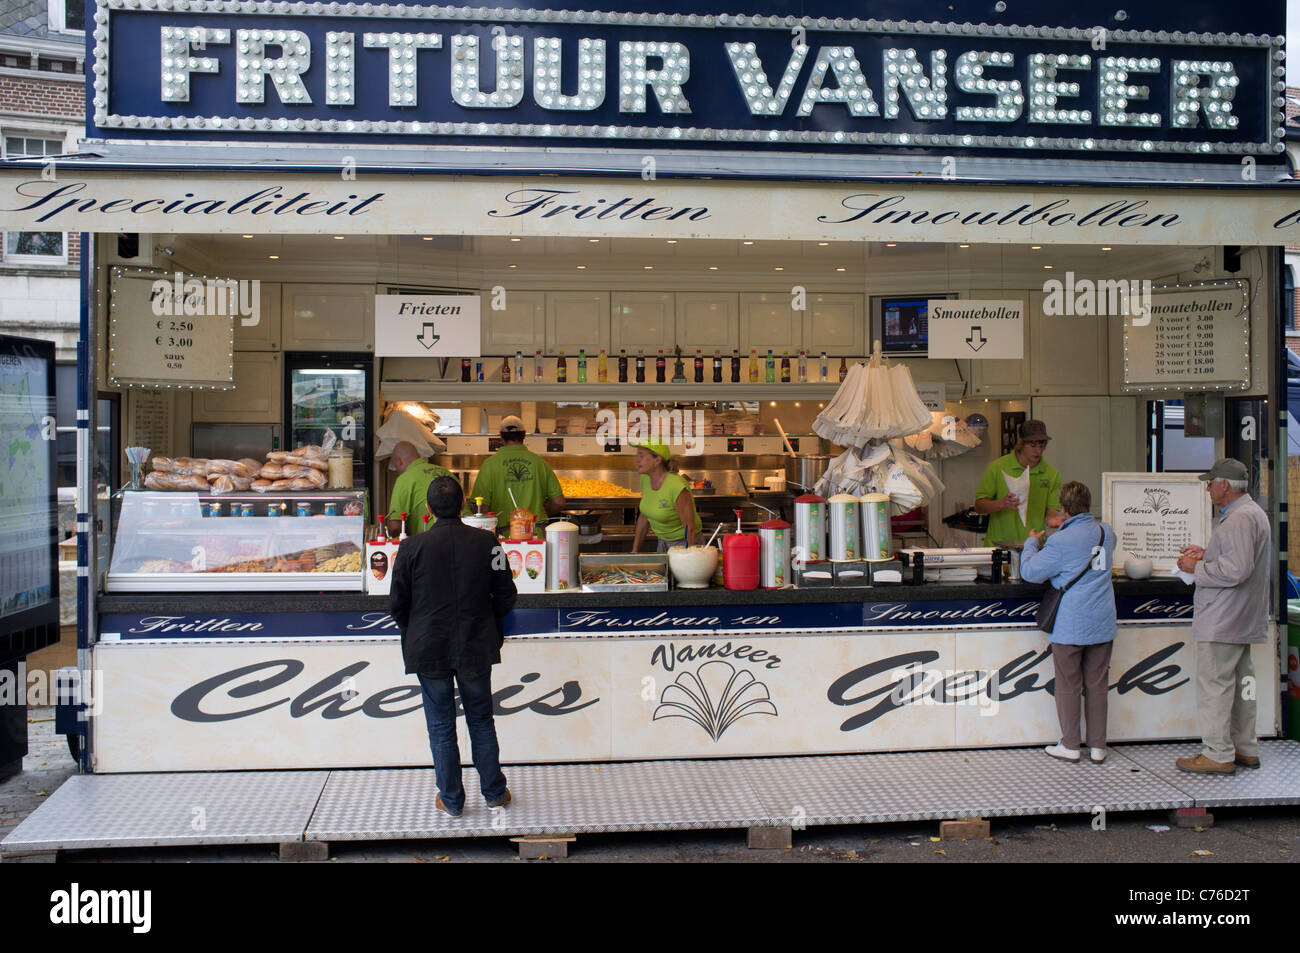 French Fries van selling frites on street in Tongeren in Belgium Stock Photo